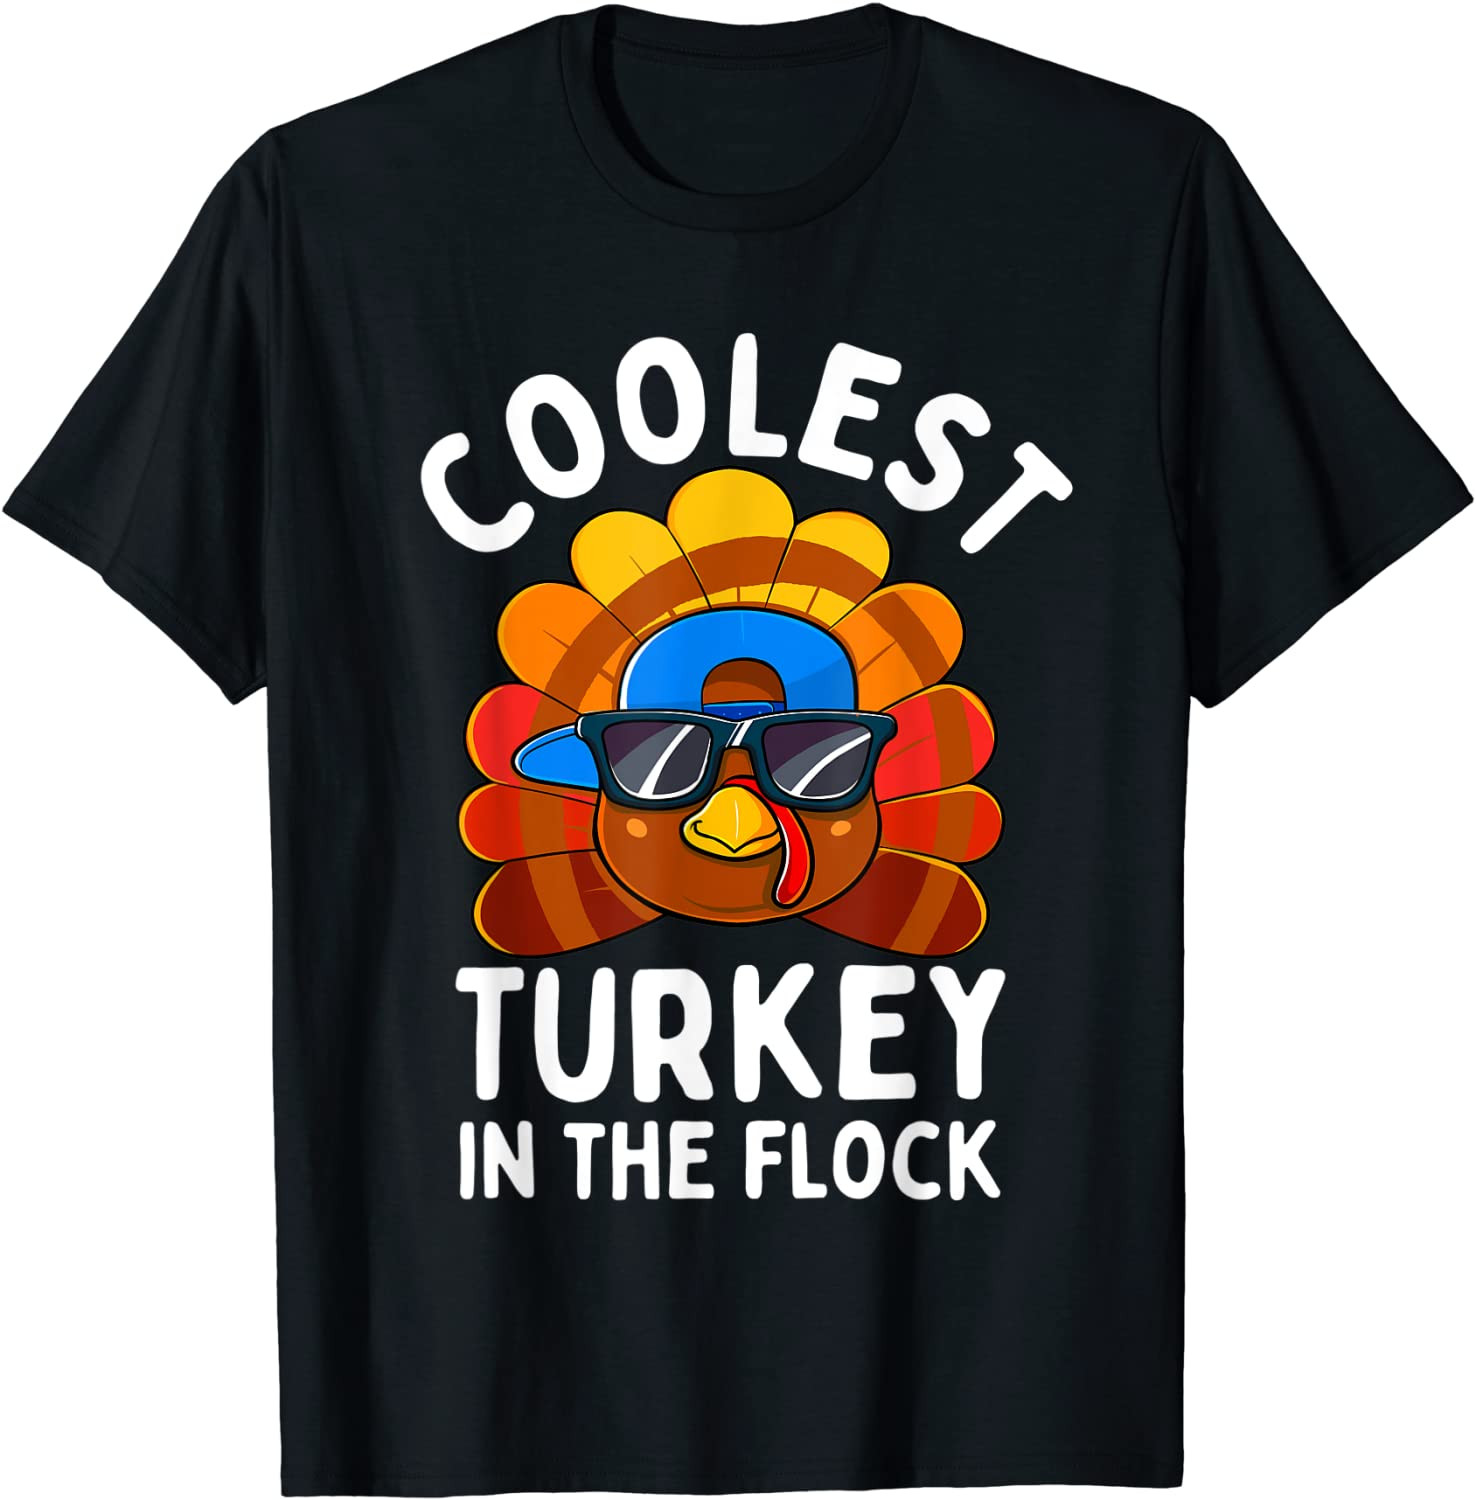 Boys Thanksgiving Kids Toddler Coolest Turkey In The Flock T-Shirt